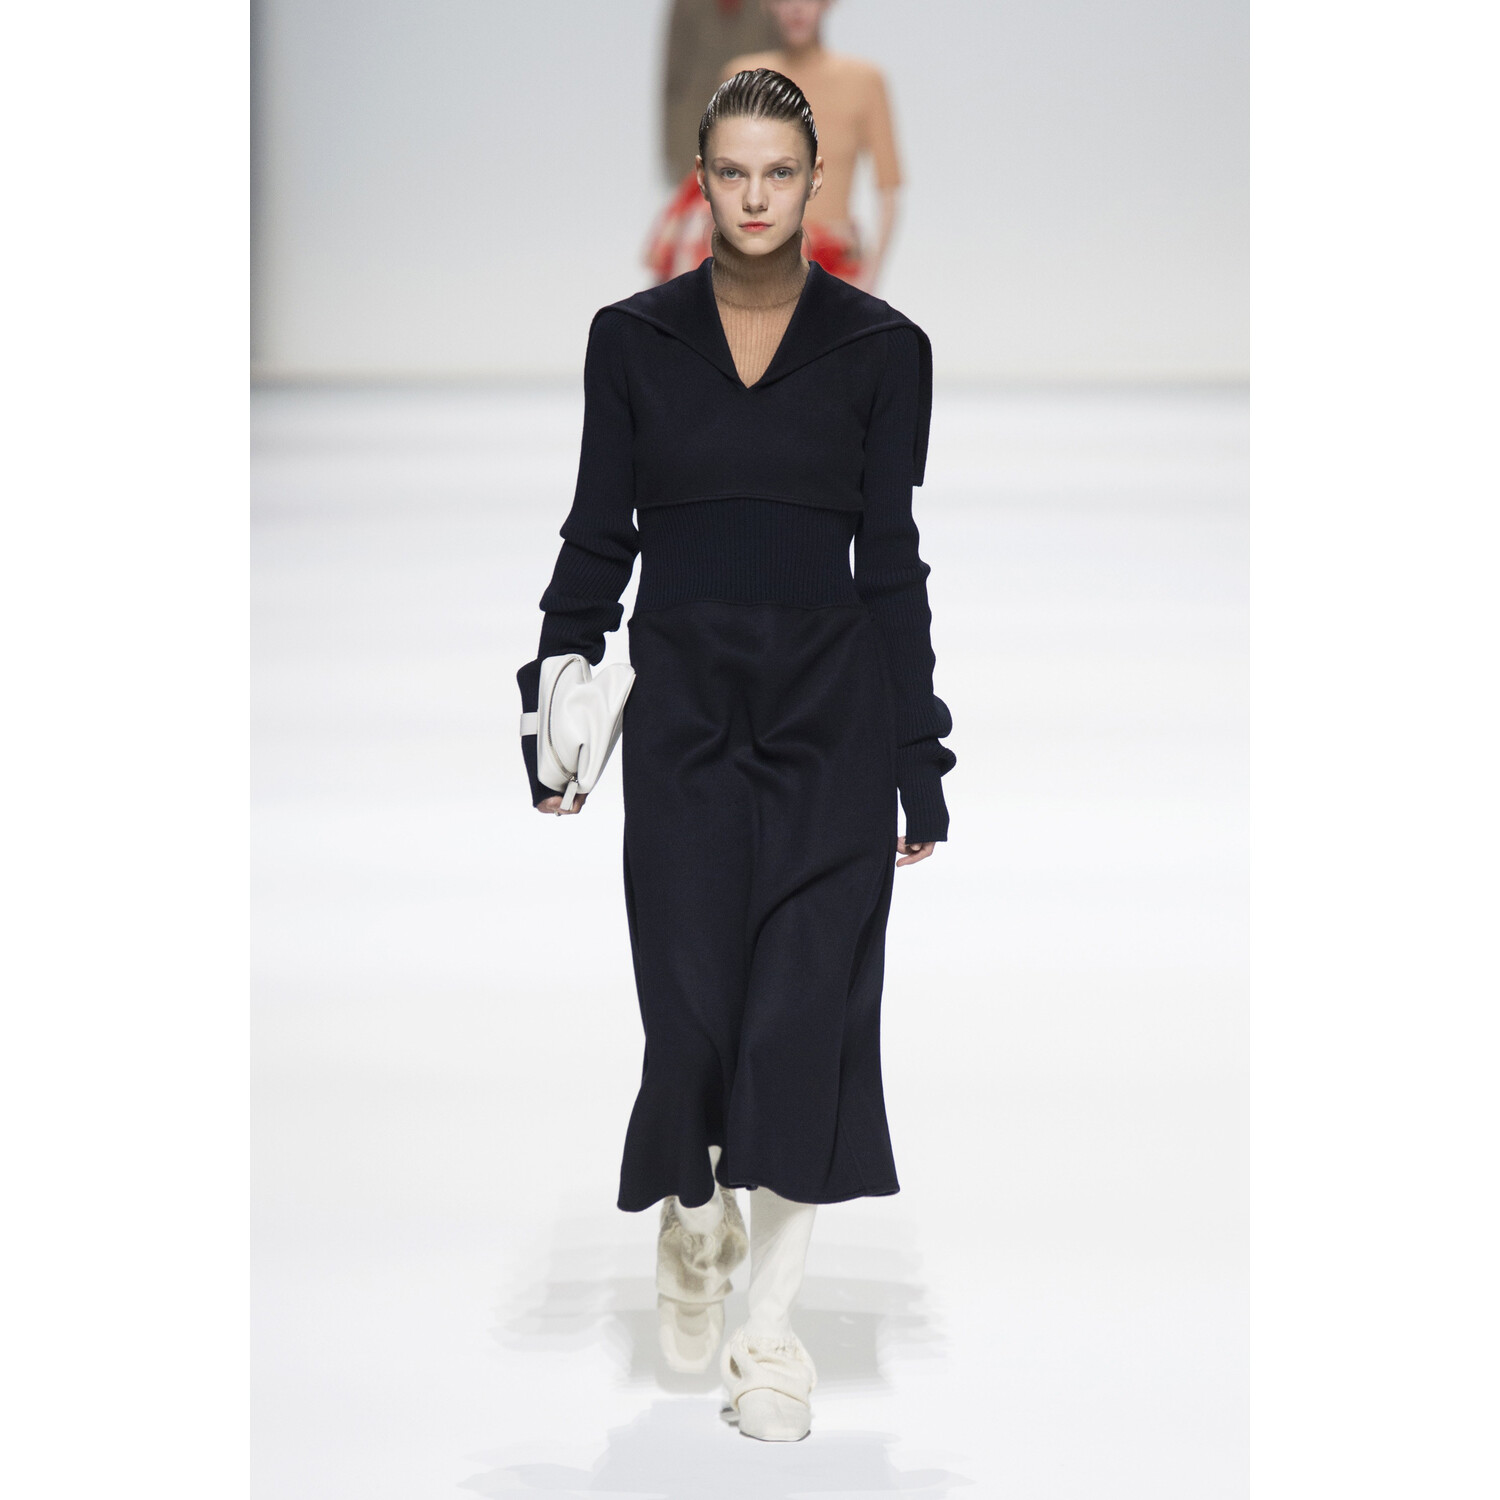 Фото Jil Sander Fall 2018 Ready-to-Wear , Джил Сандер осень зима 2018 , Fashion show , неделя моды в Милане , MFW , Mainstyles